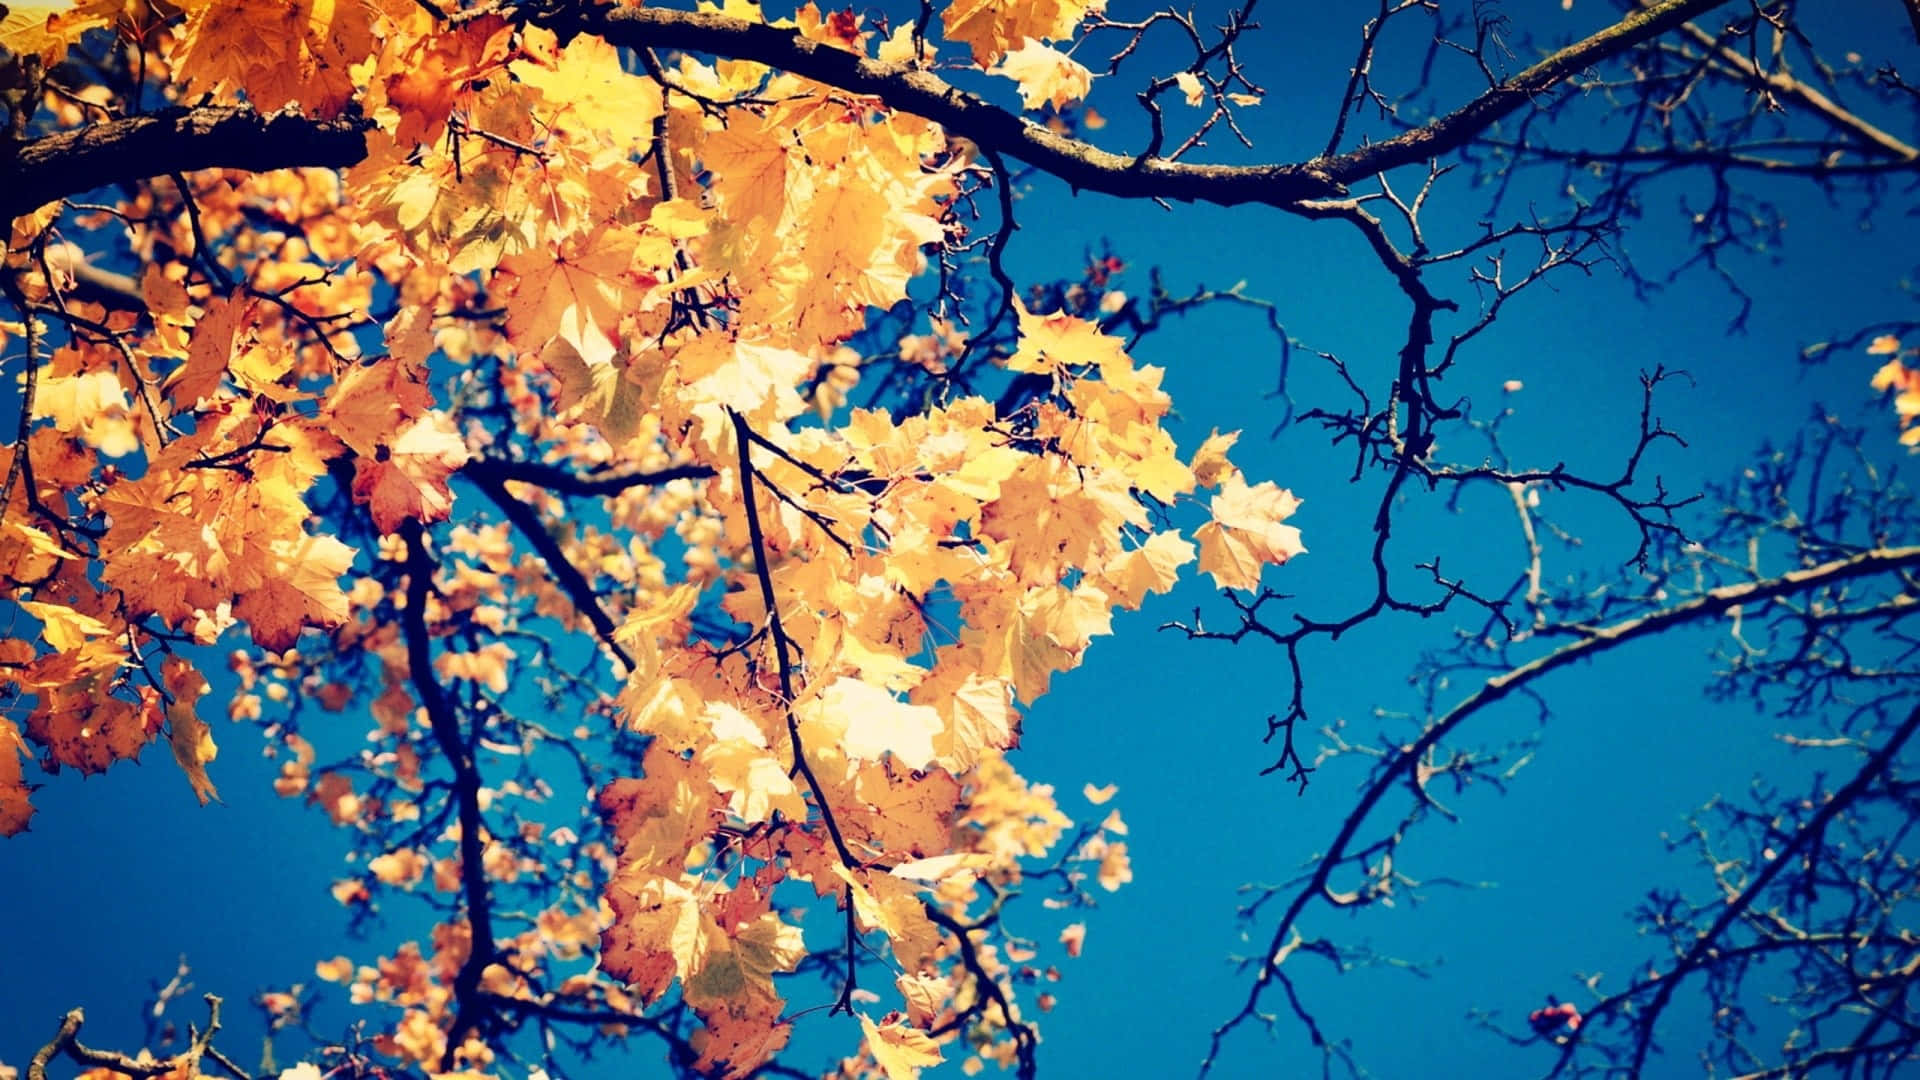 Autumn Symphony on Your Desktop Wallpaper